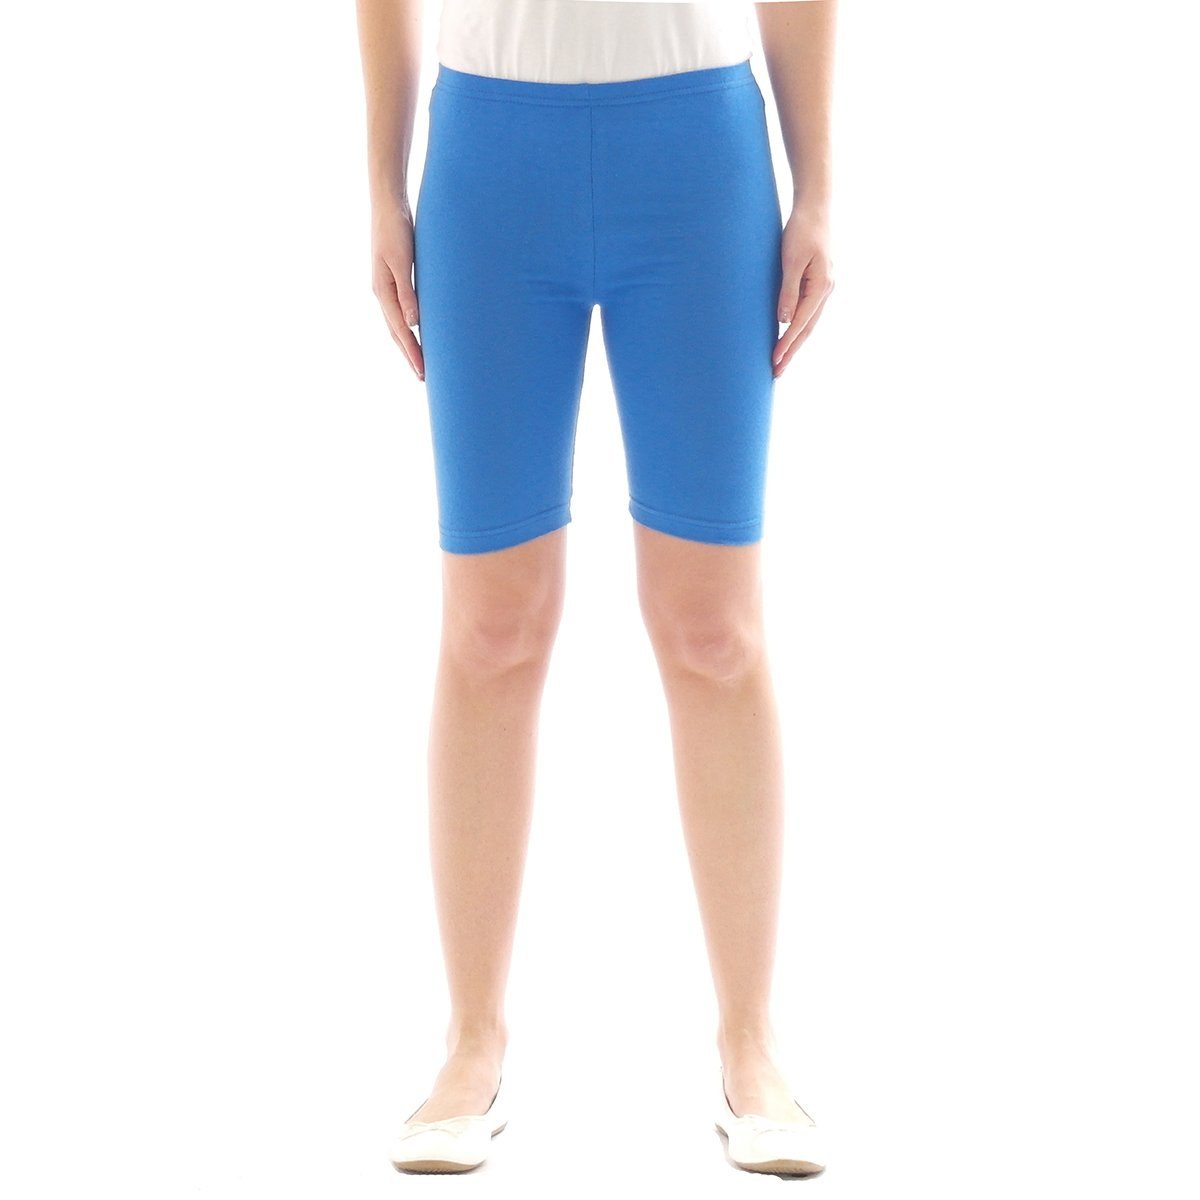 SYS Shorts Kinder Shorts Sport Pants 1/2 Baumwolle Jungen Mädchen blau